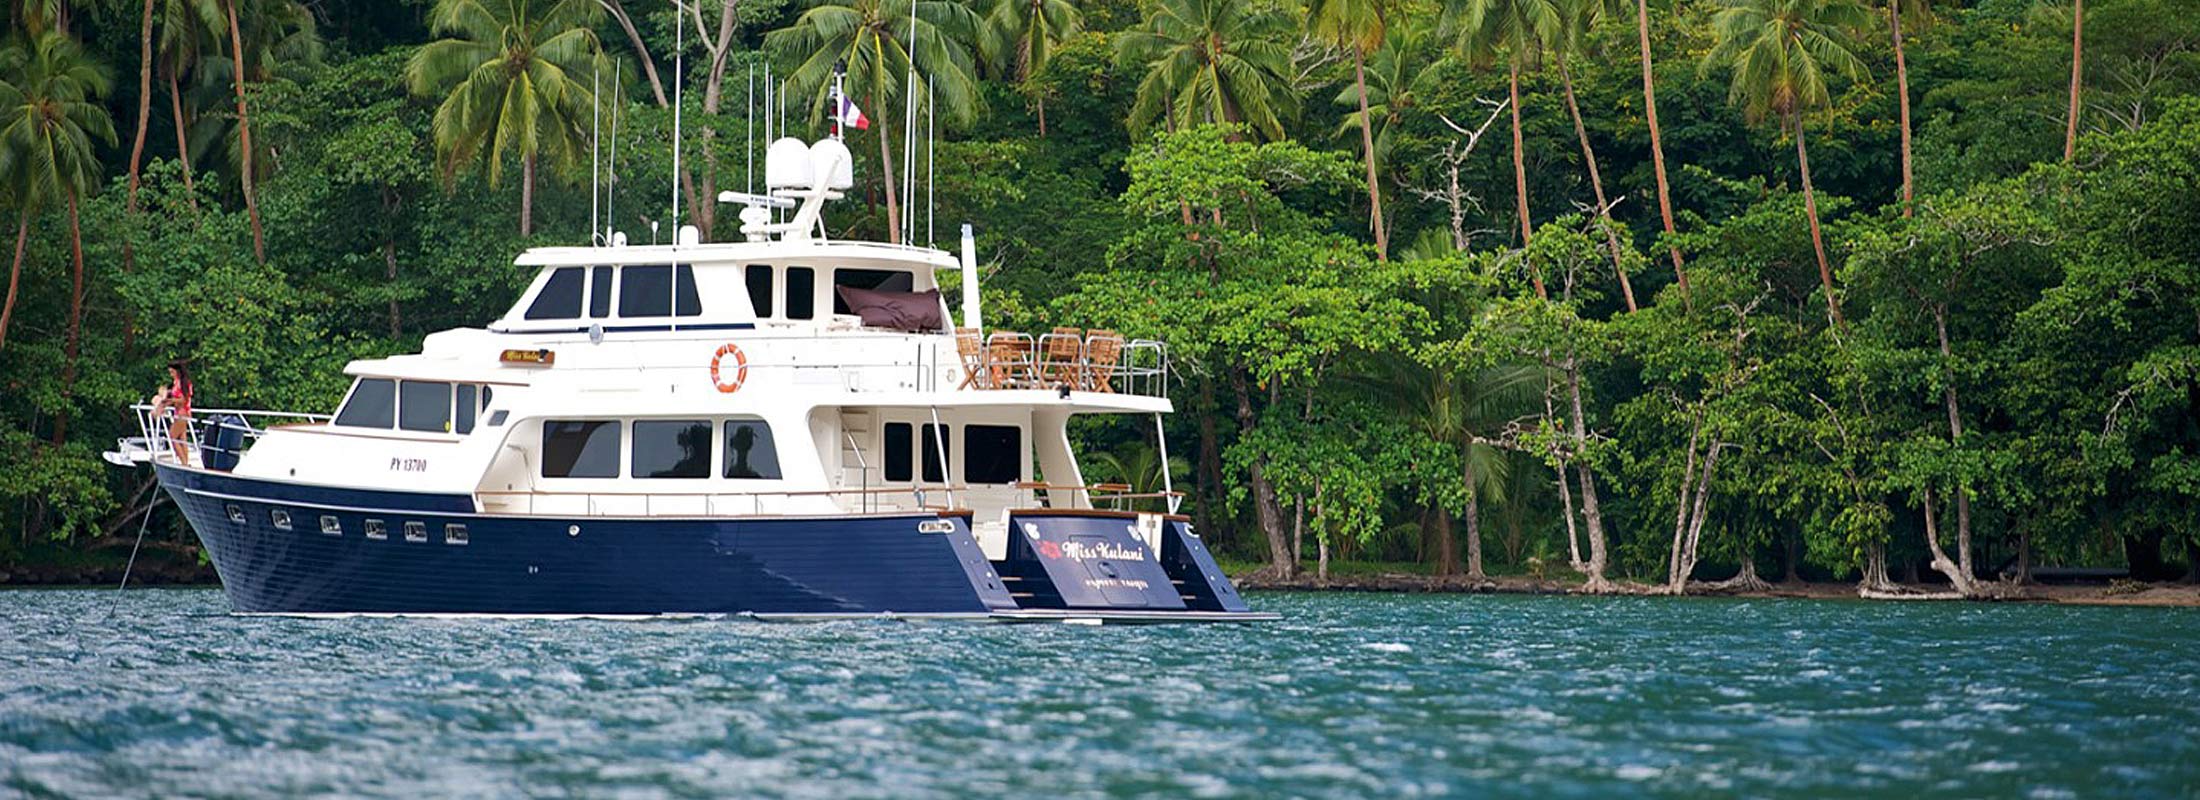 Miss Kulani Motor Yacht for Charter Tahiti Fiji Bora Bora slider 1